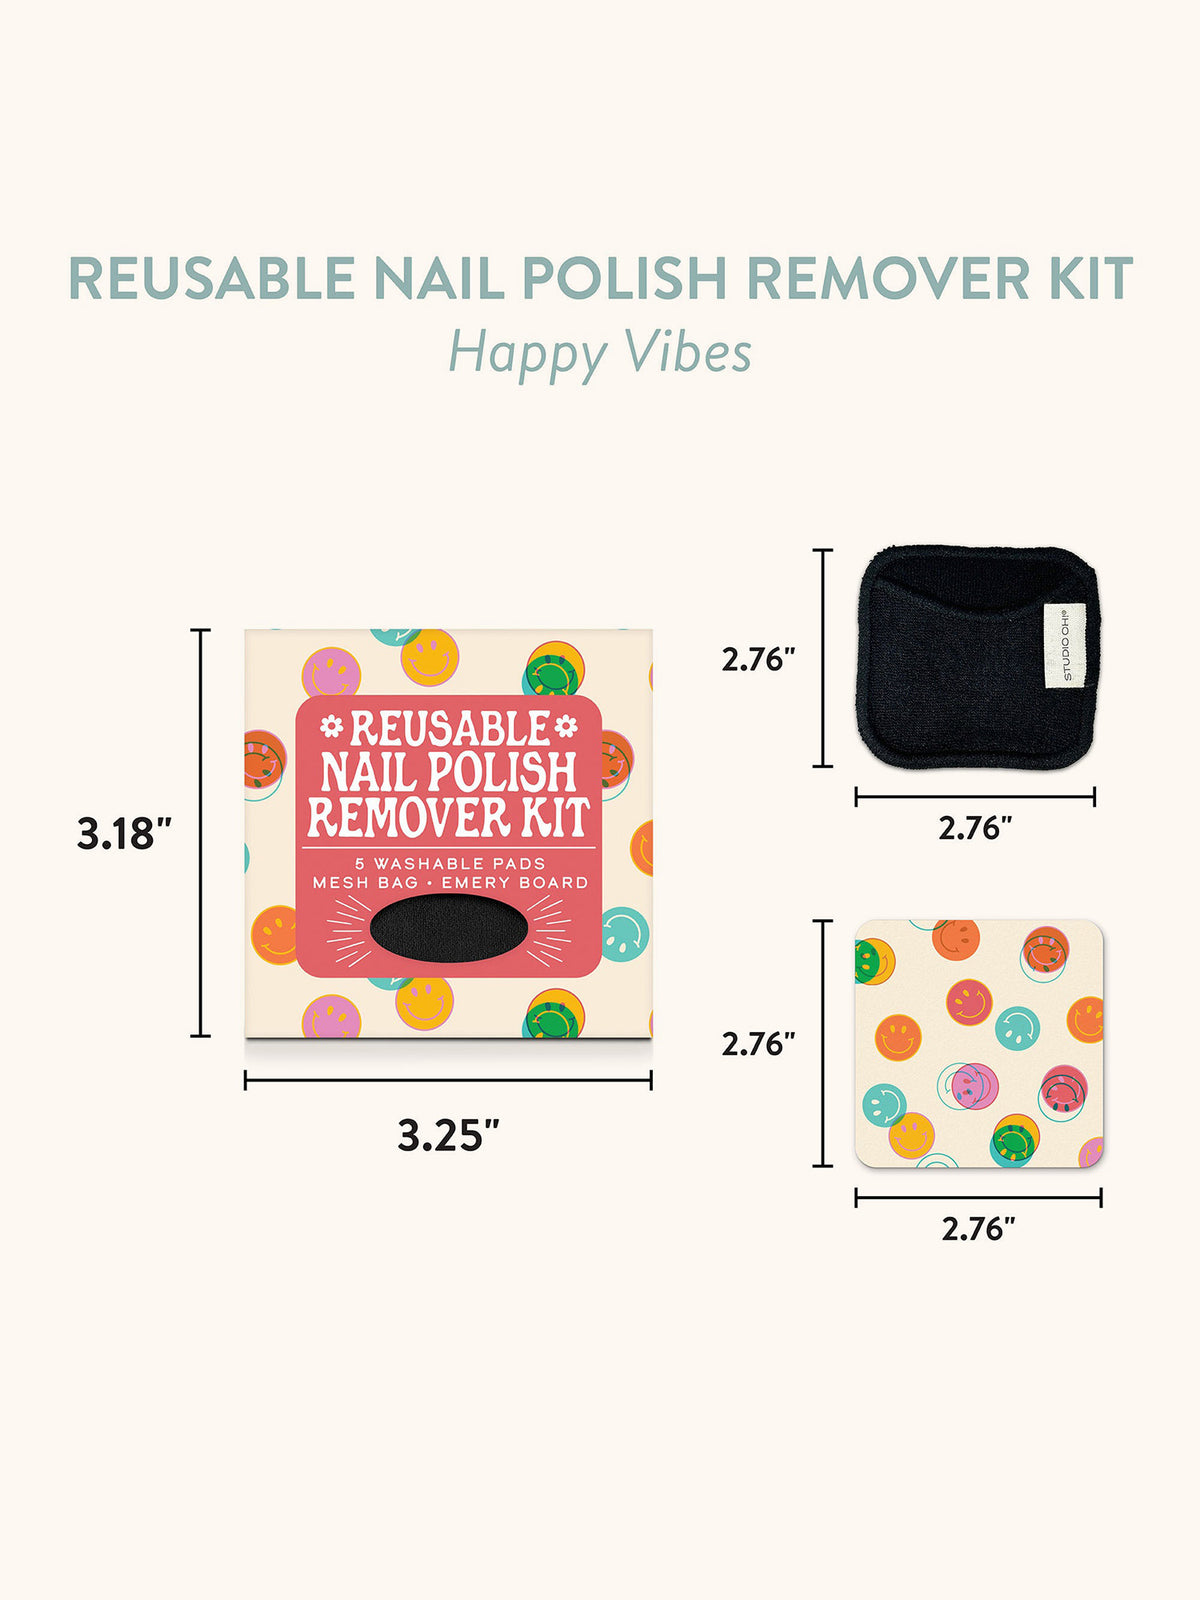 Happy Vibes Reusable Nail Polish Remover Kit